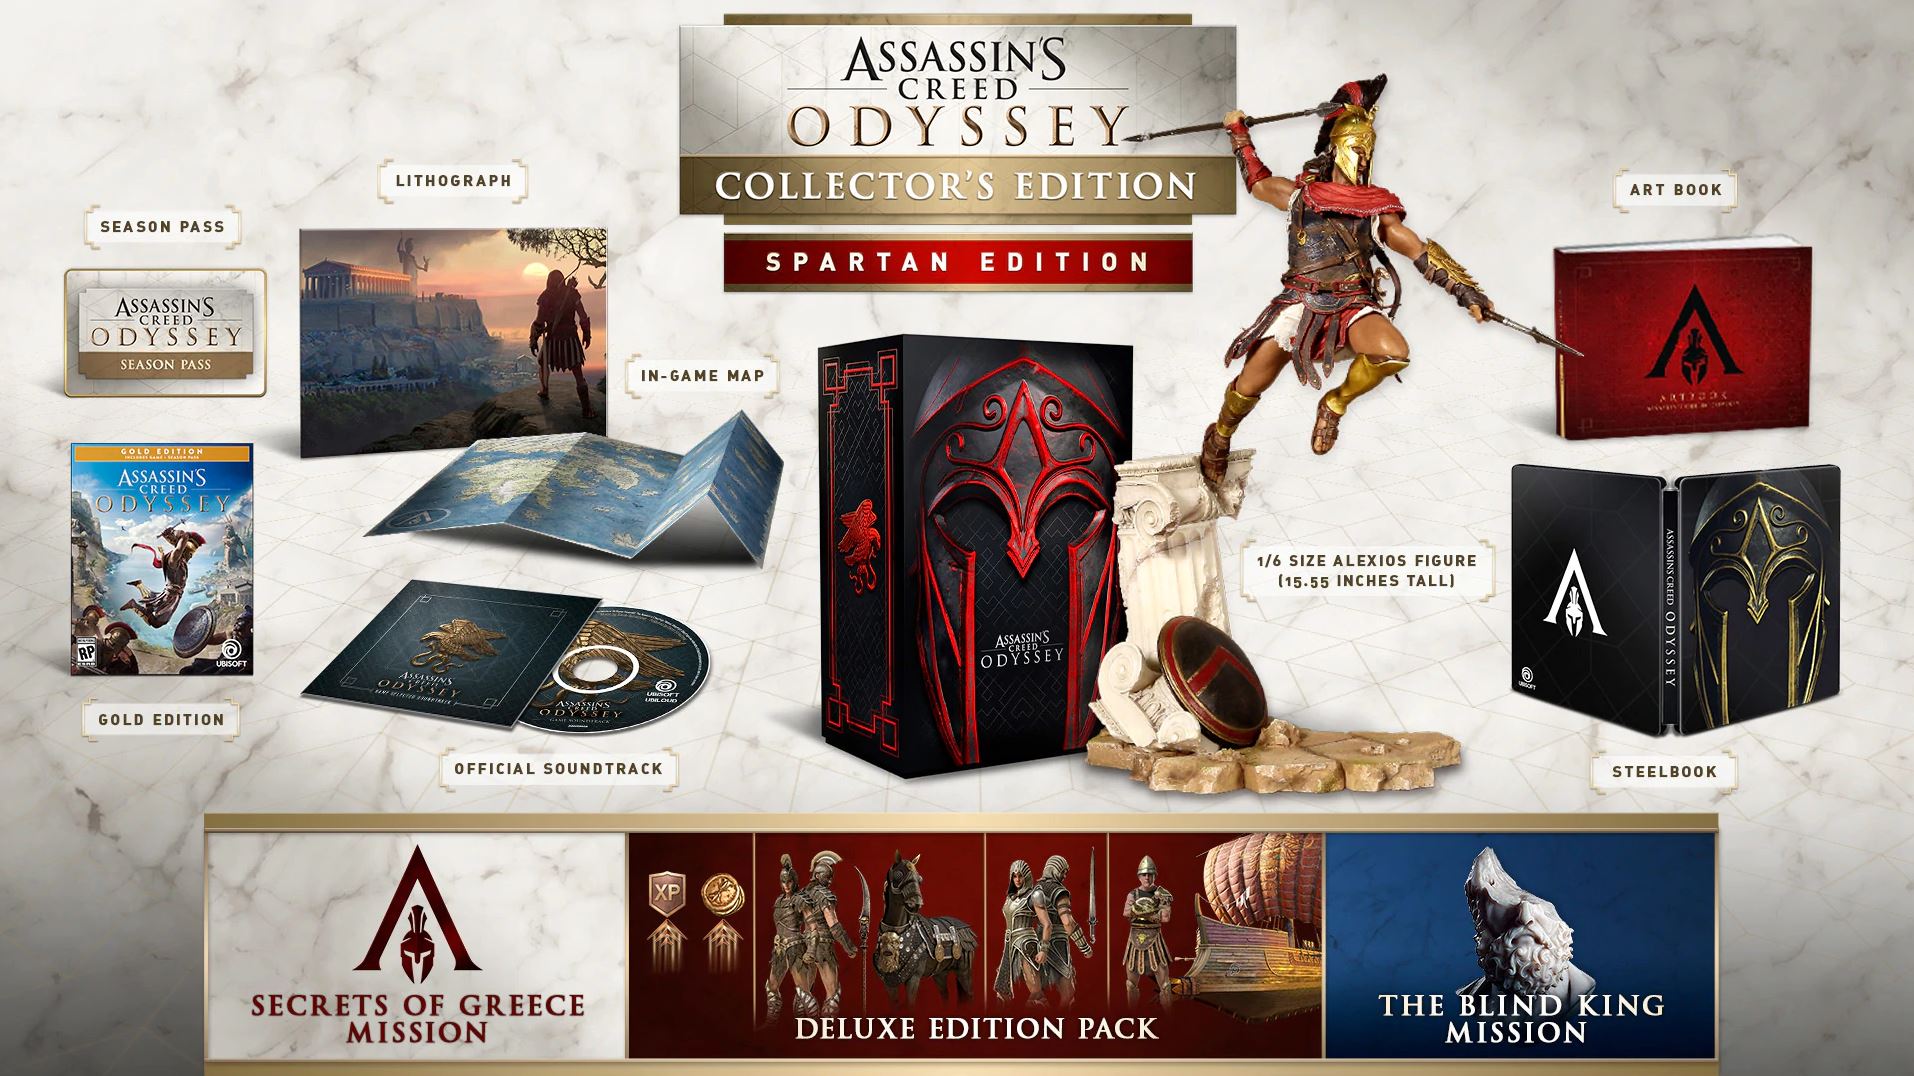 Multi Assassin S Creed Odyssey Gold Steelbook Edition Us Hi Def Ninja Pop Culture Movie Collectible Community